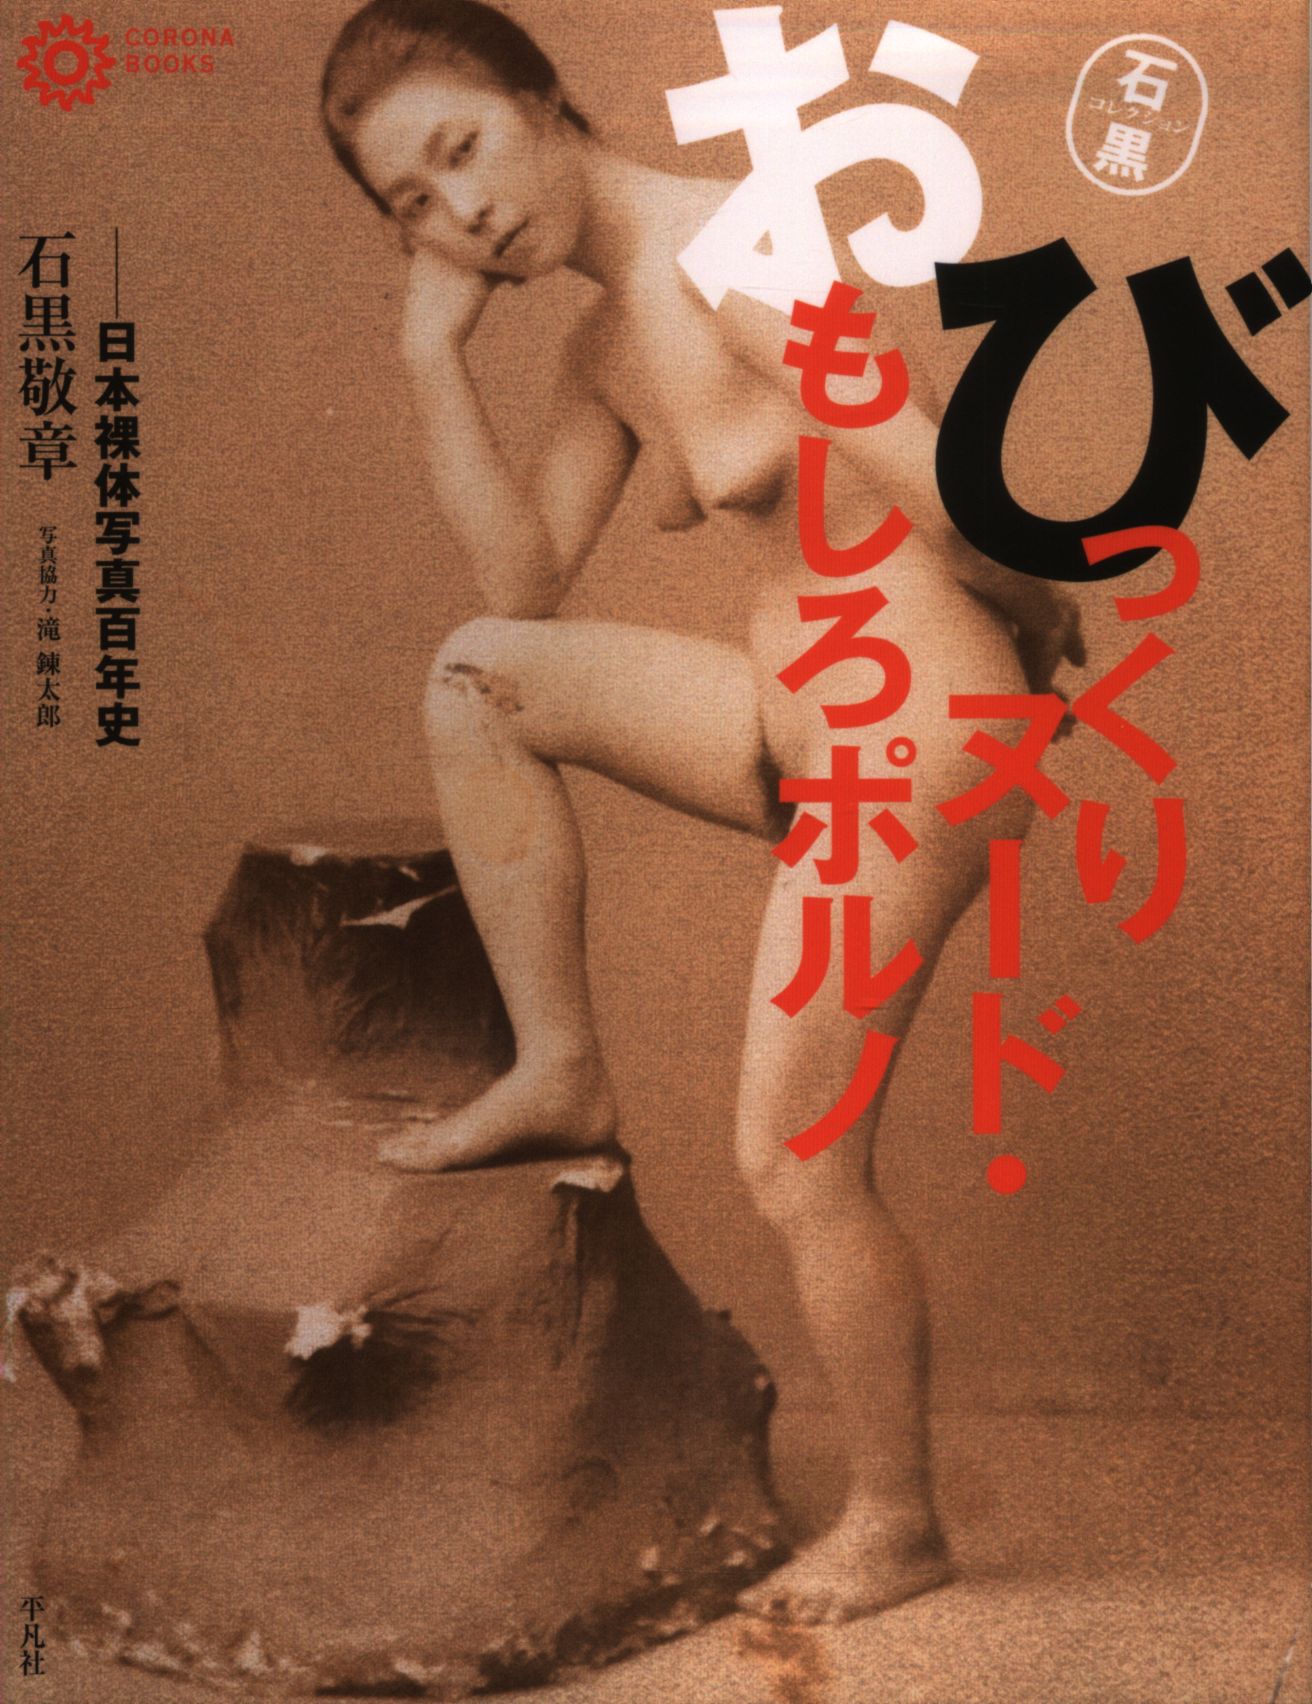 Nude Japan Book - Ishiguro TakashiAkira surprised nude ãƒ» fun porn Japan nude photo hundred  year history Ishiguro collection | Mandarake Online Shop